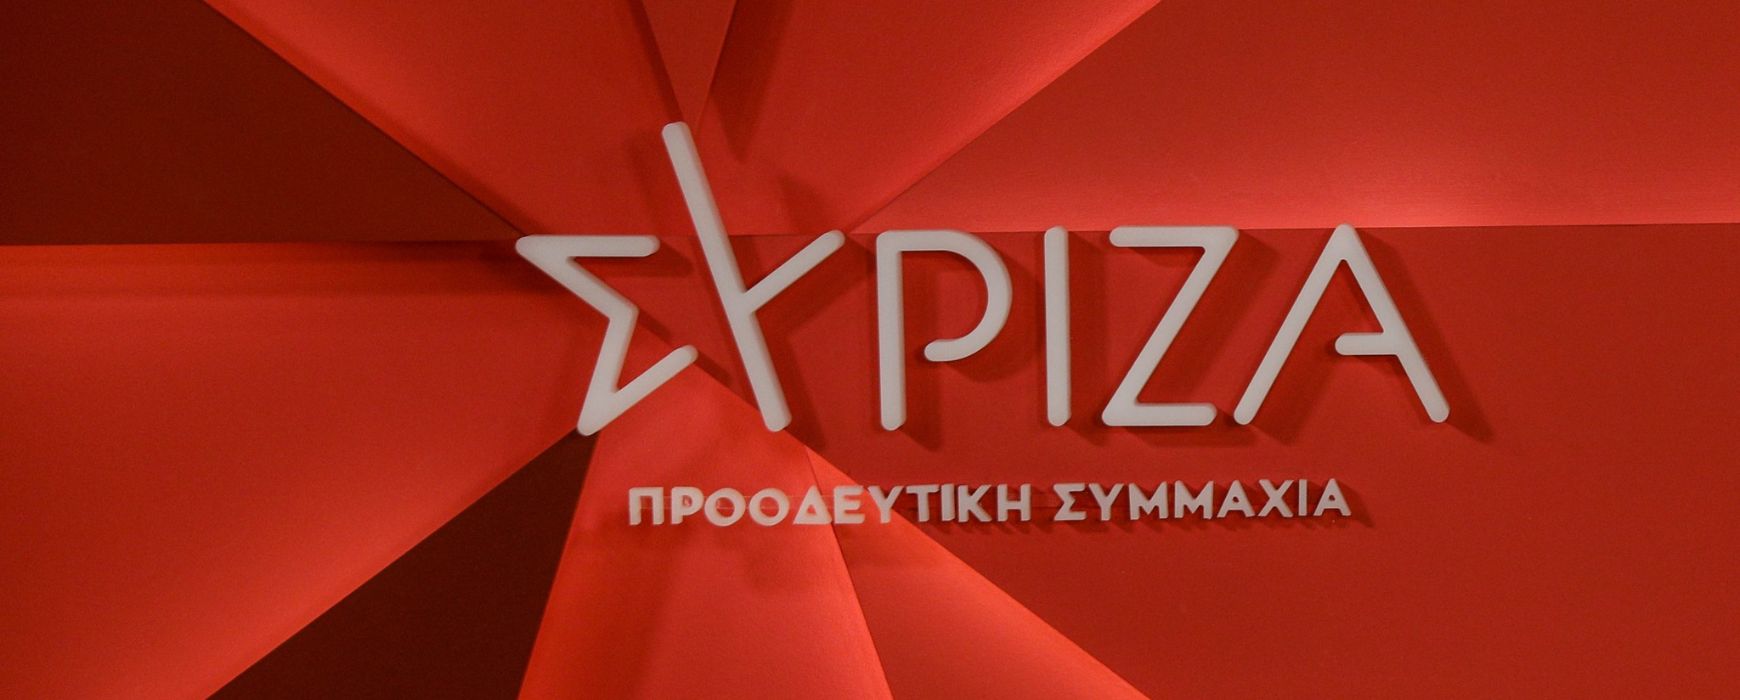 SYRIZA-logo_new